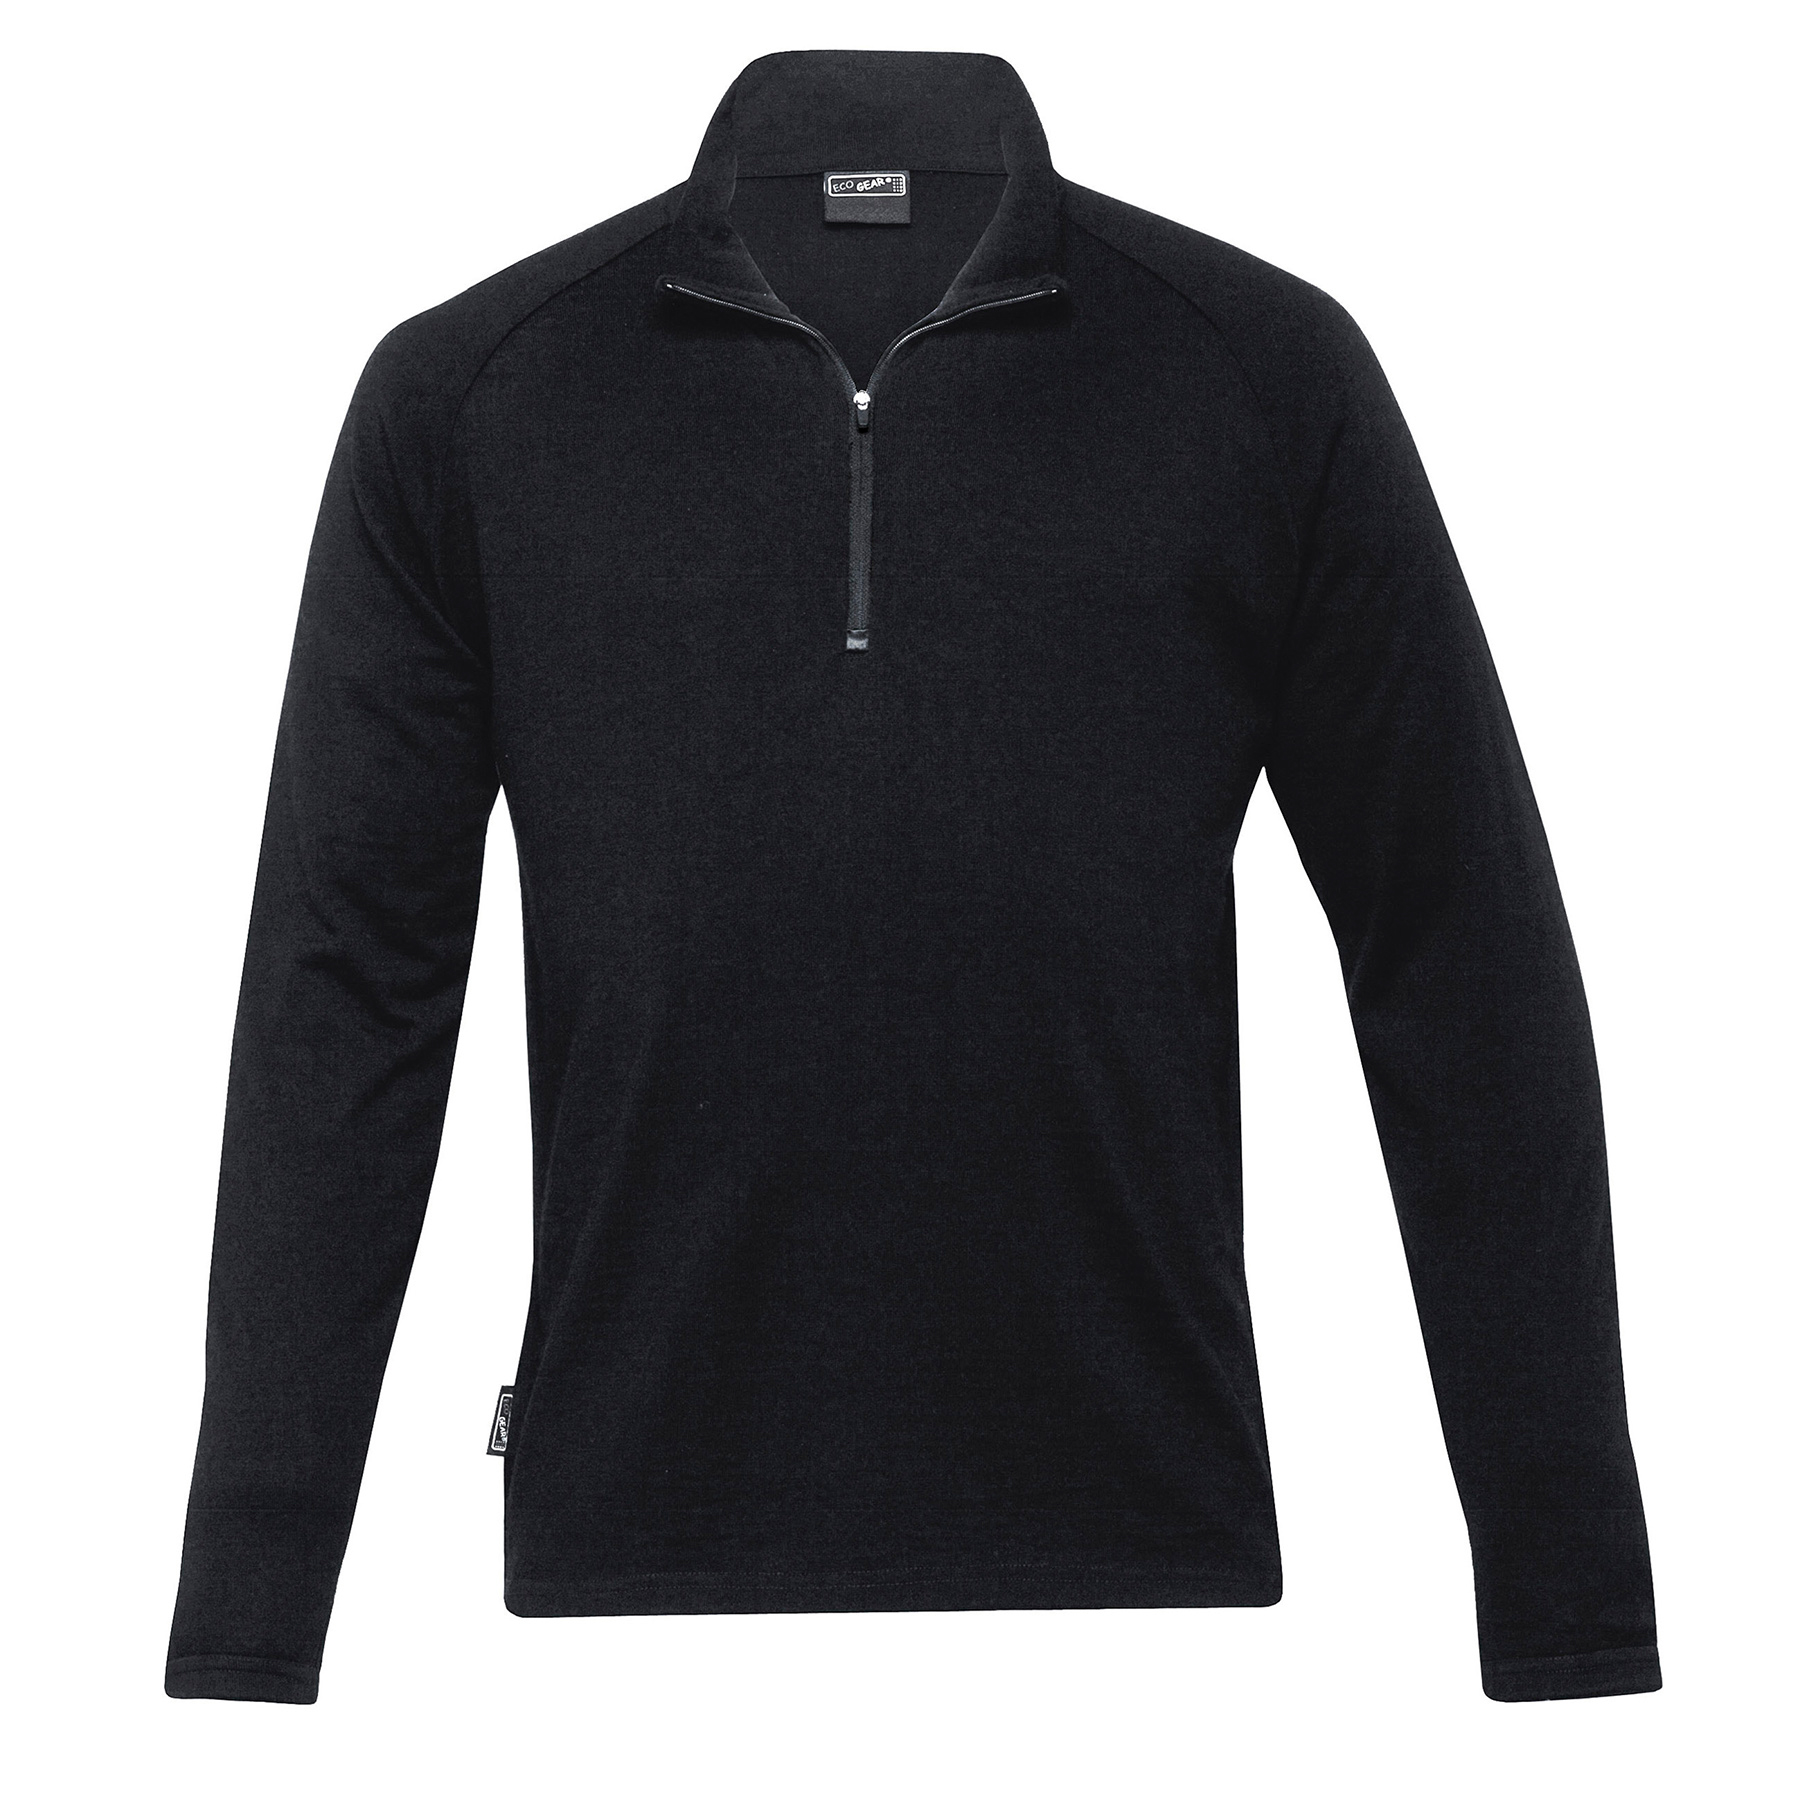 Mens Merino Zip Pullover by Eco Gear - Online Uniforms